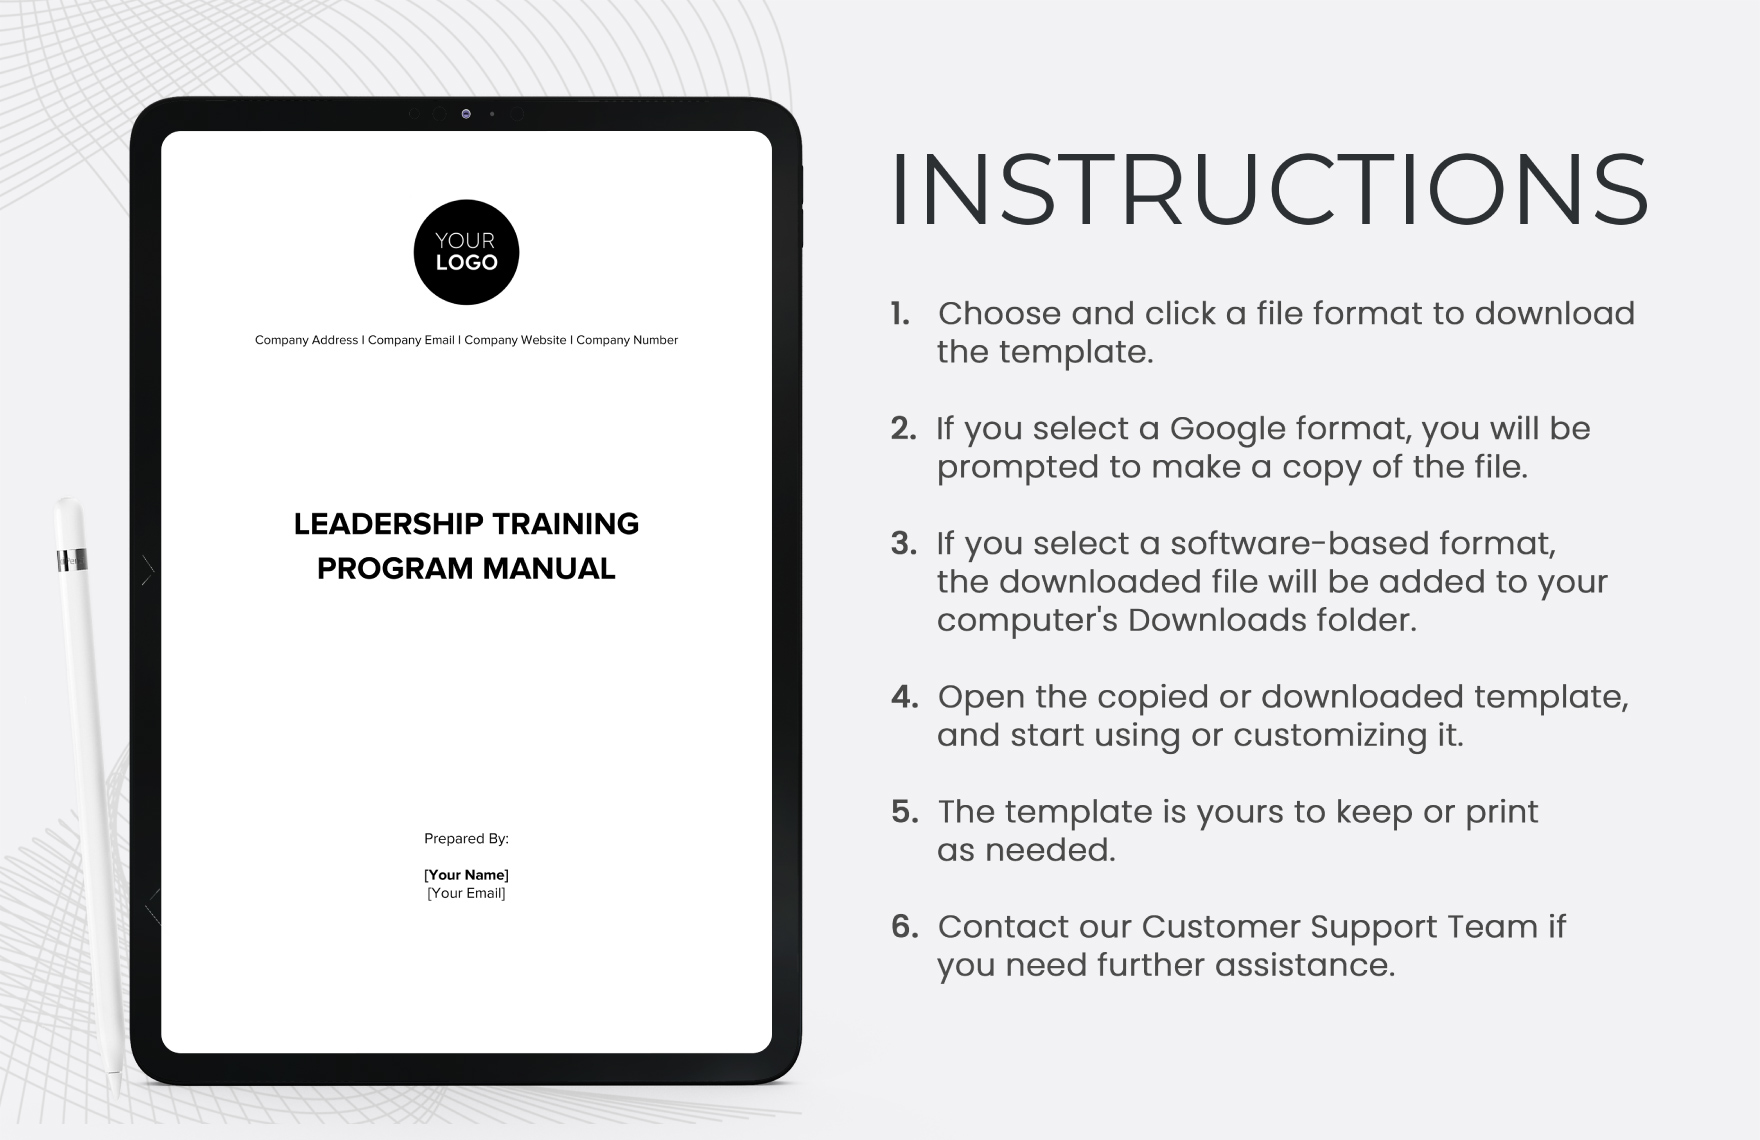 Leadership Training Program Manual HR Template